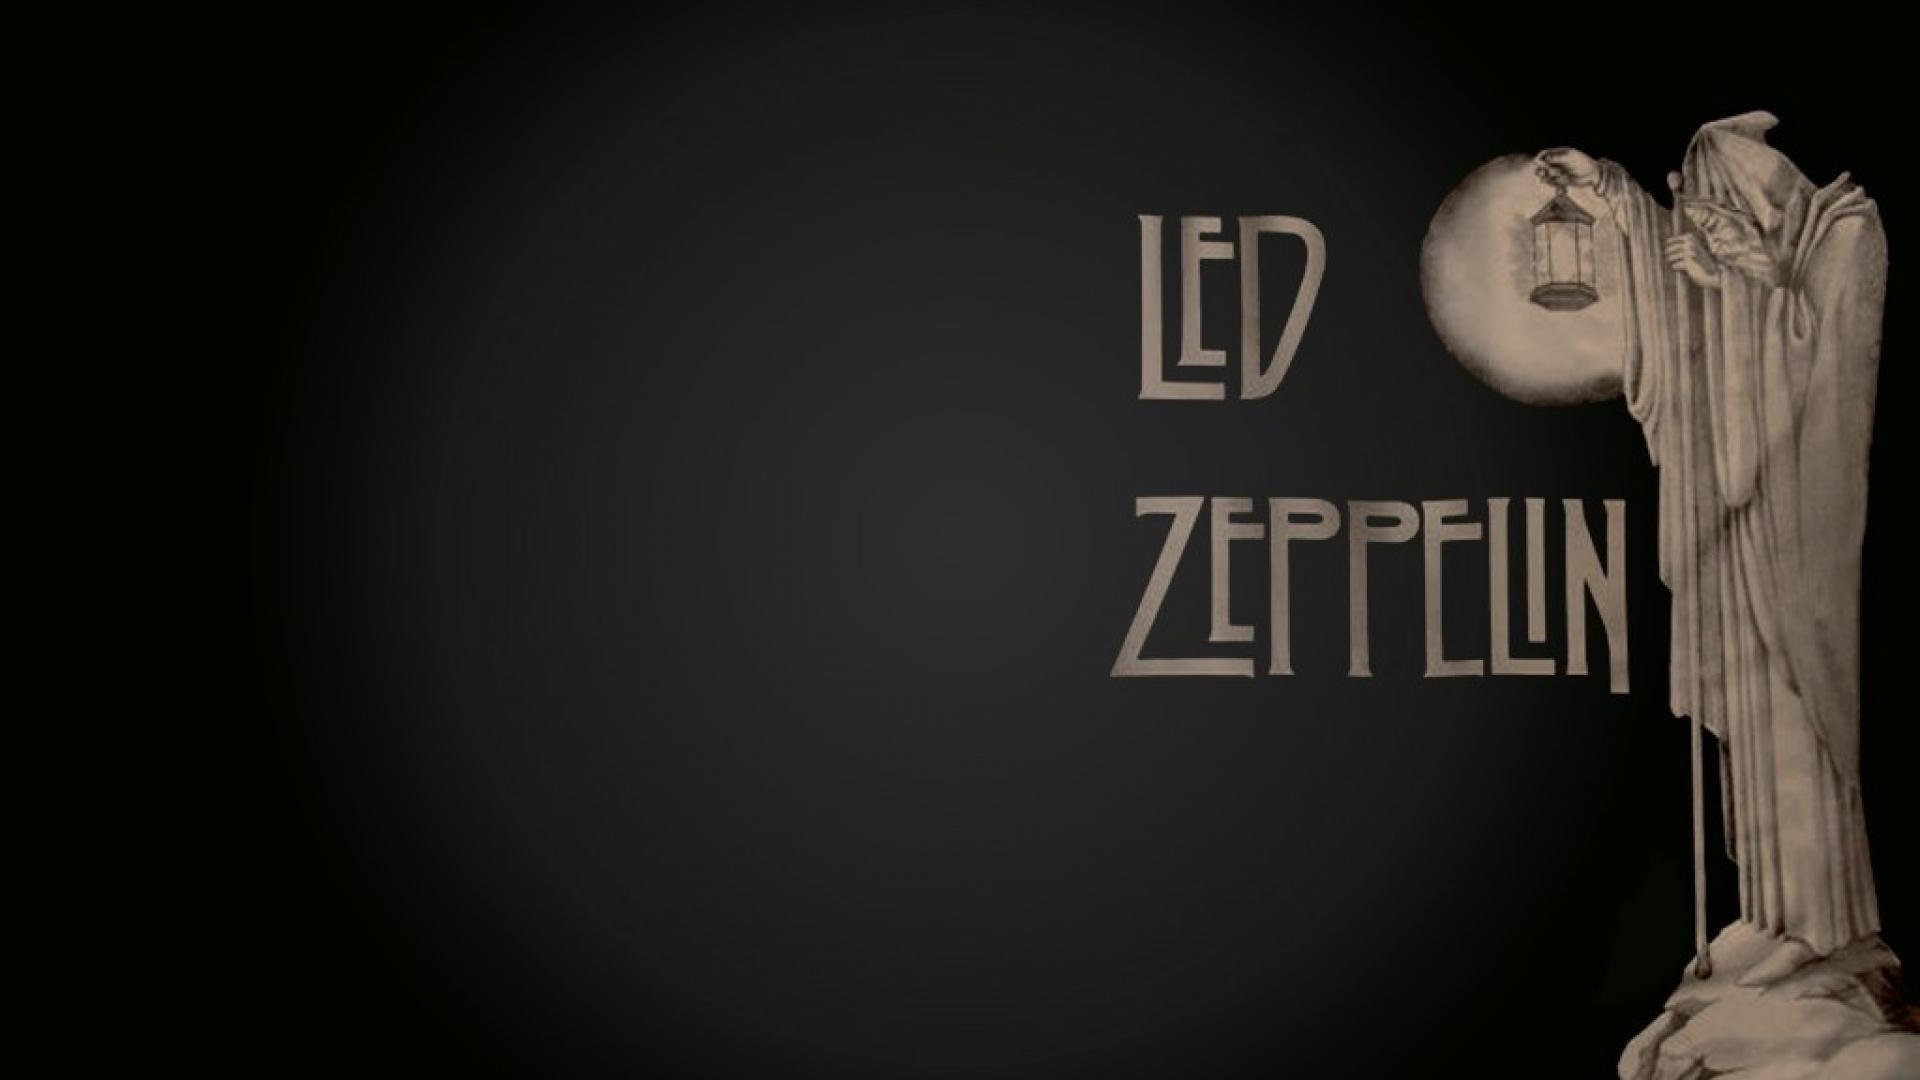 Music rock led zeppelin wallpaper | (16805)